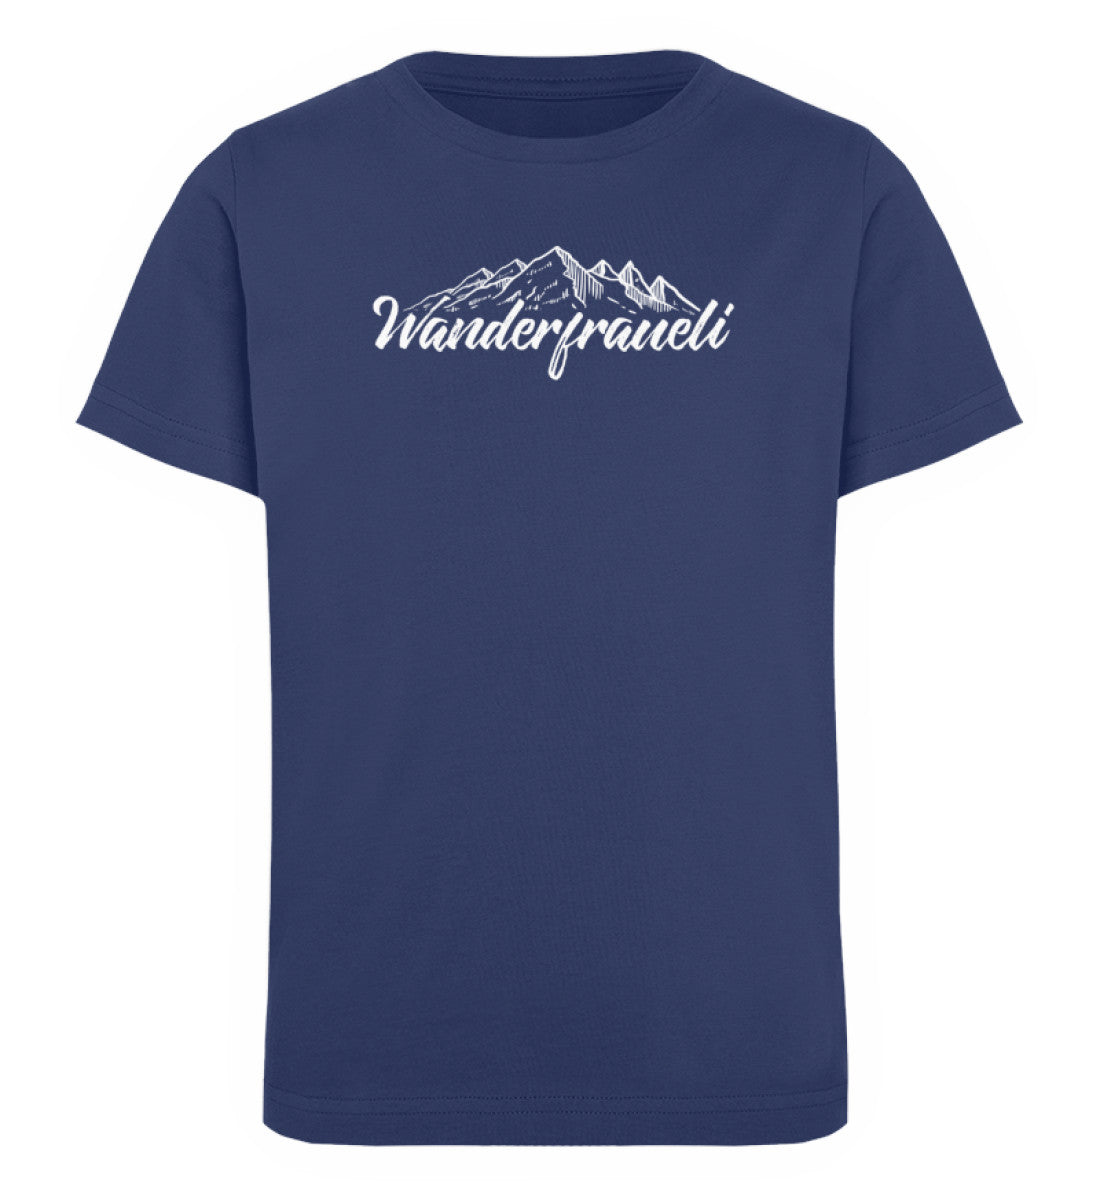 Wanderfraueli - Kinder Premium Organic T-Shirt Navyblau